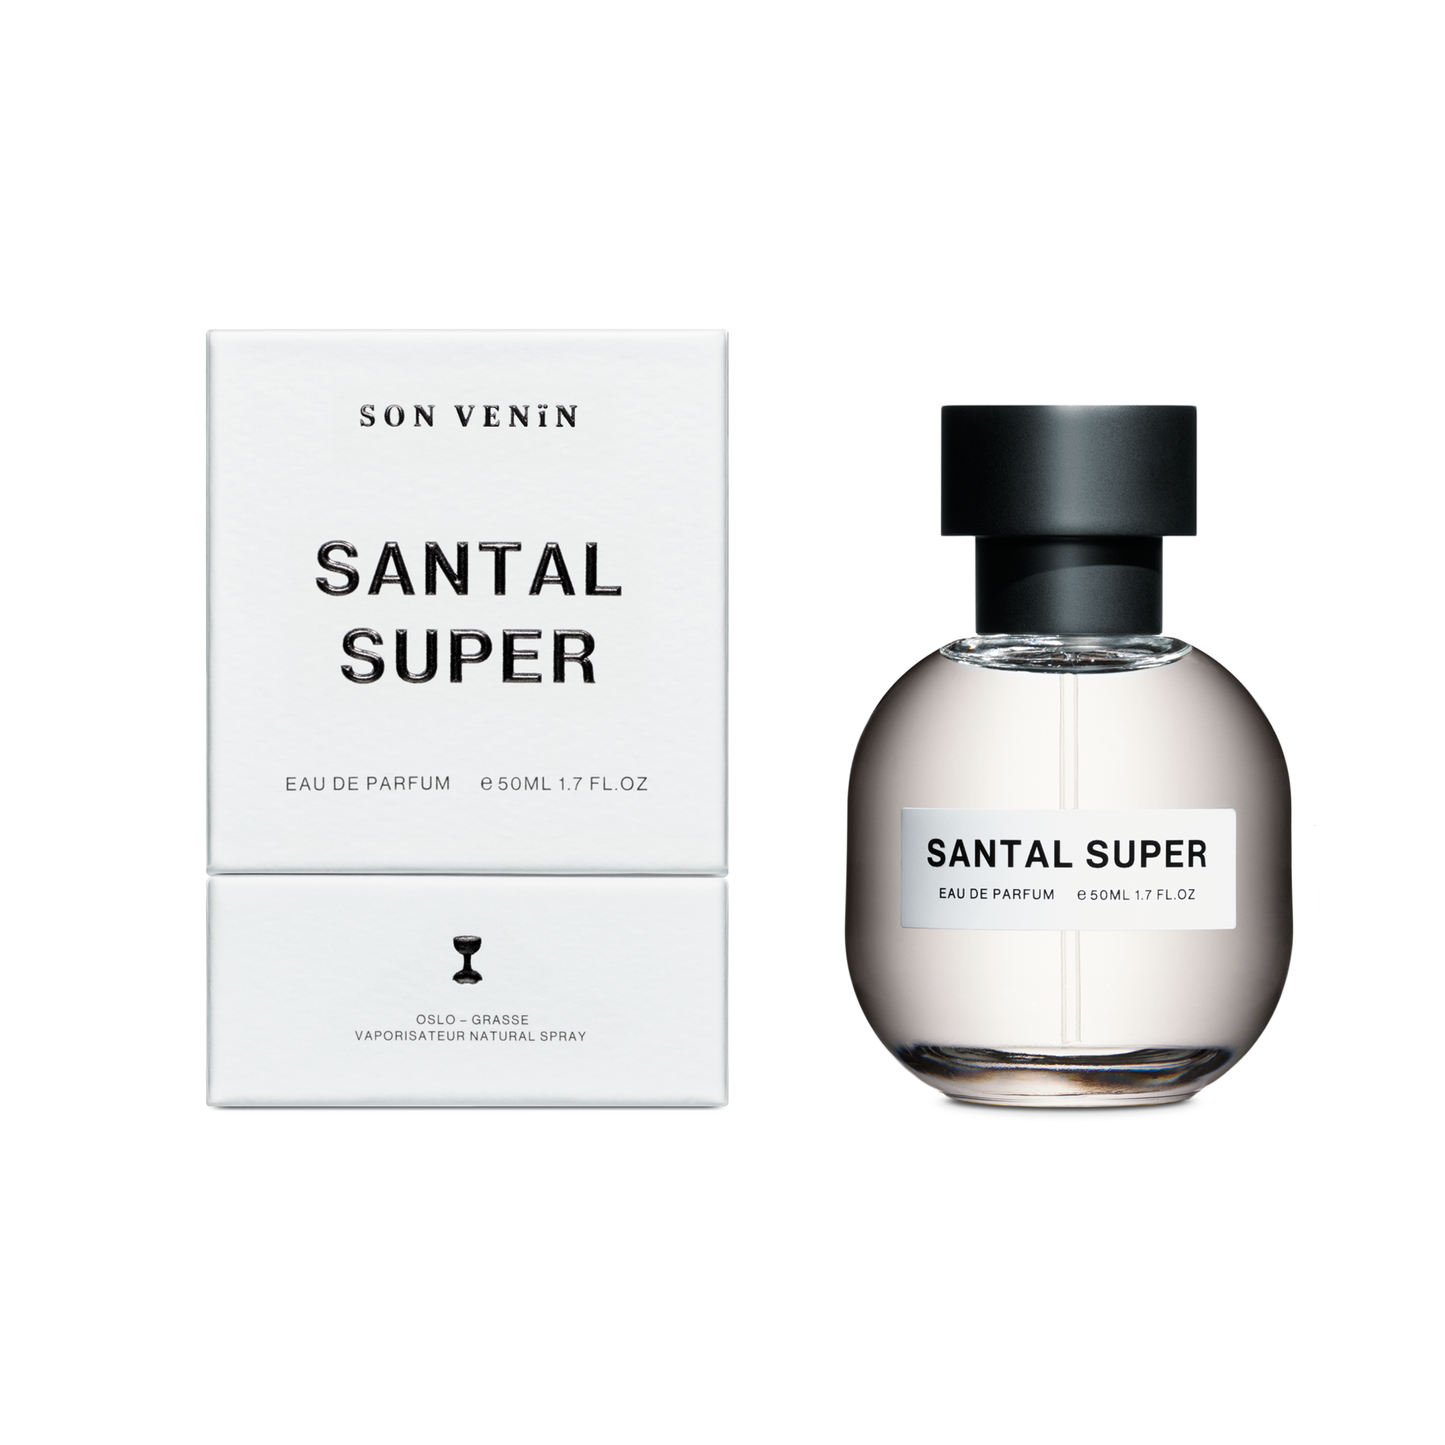 Son Venin SANTAL SUPER Bottle and Packaging